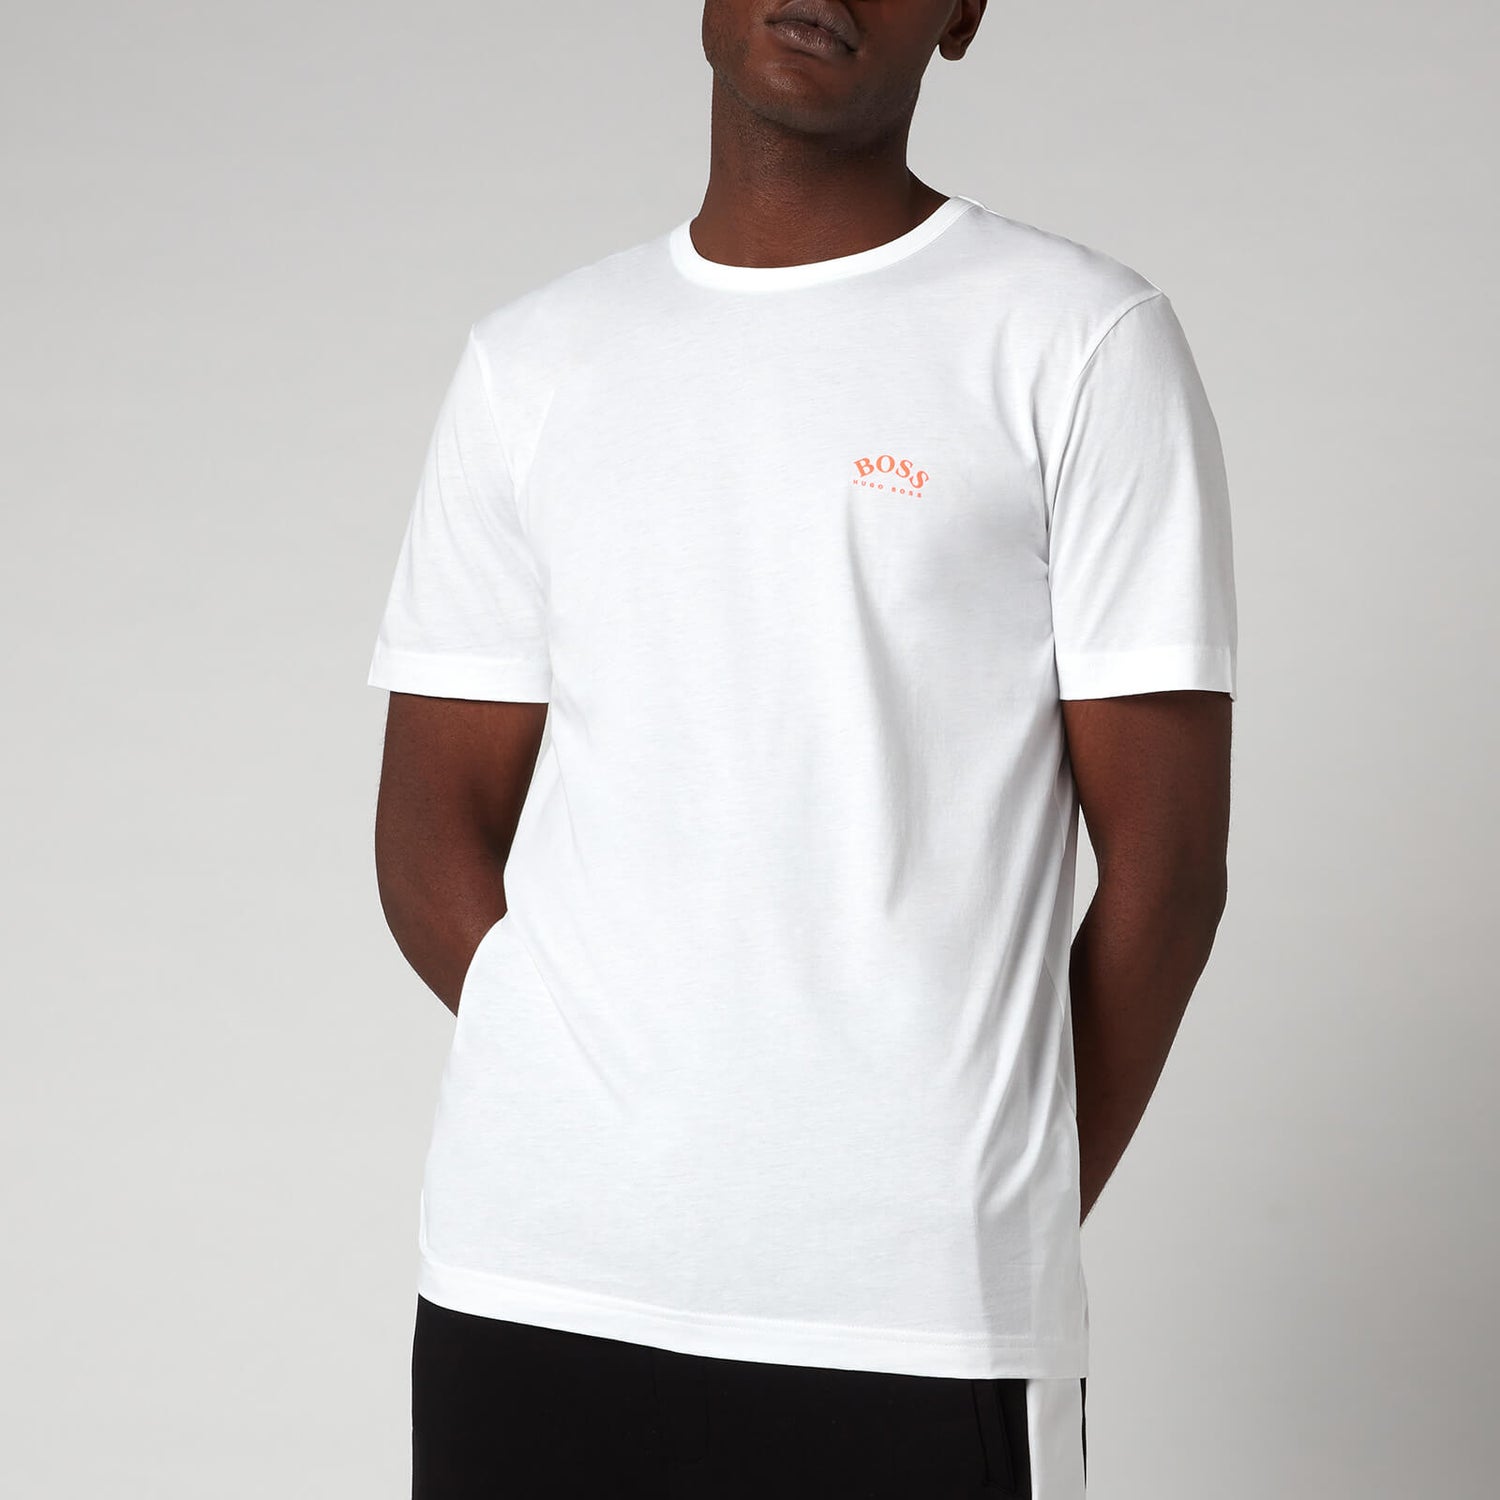 BOSS Athleisure Men's Curved Logo T-Shirt - Natural